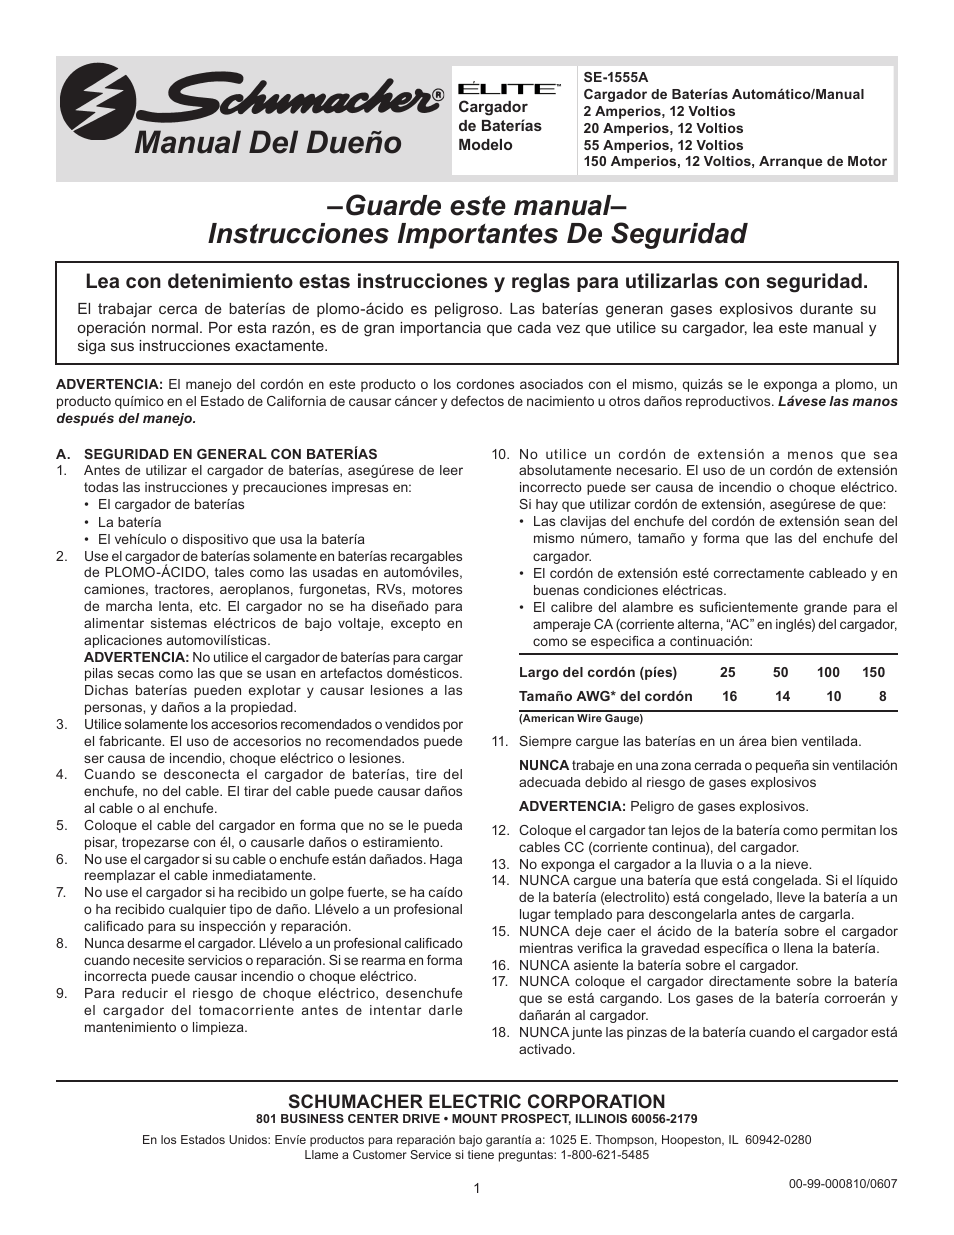 99-000810-0607_spanish, Manual del dueño, Schumacher electric